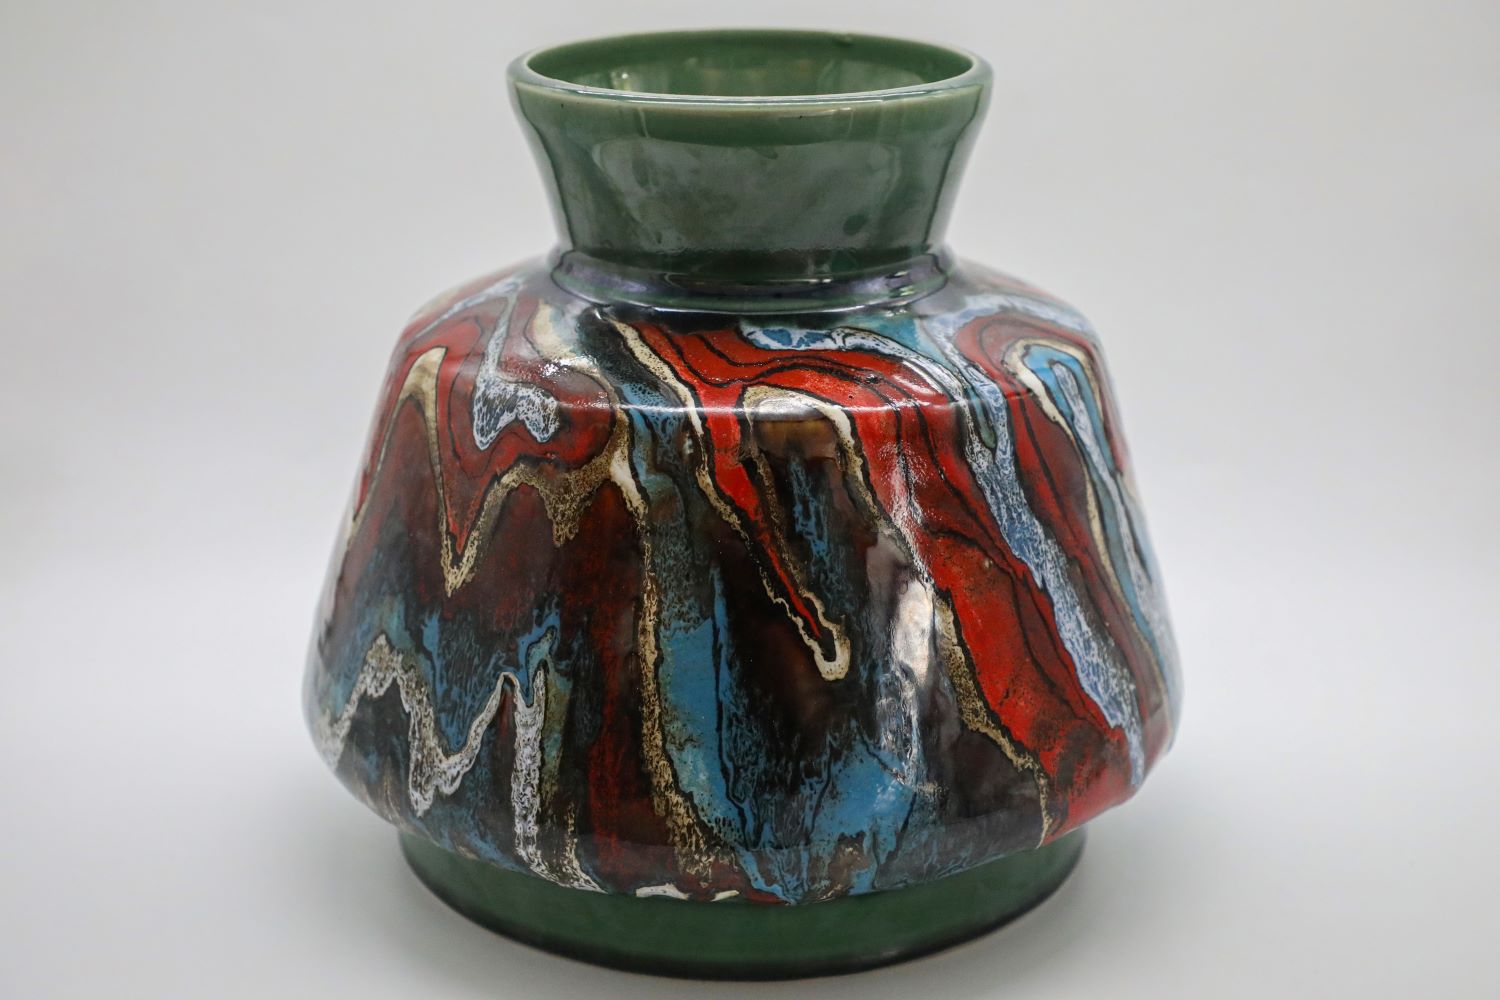 Gorgeous Highland Vase - Vietnamese Ceramic Artwork by Artist Nguyen Thu Thuy